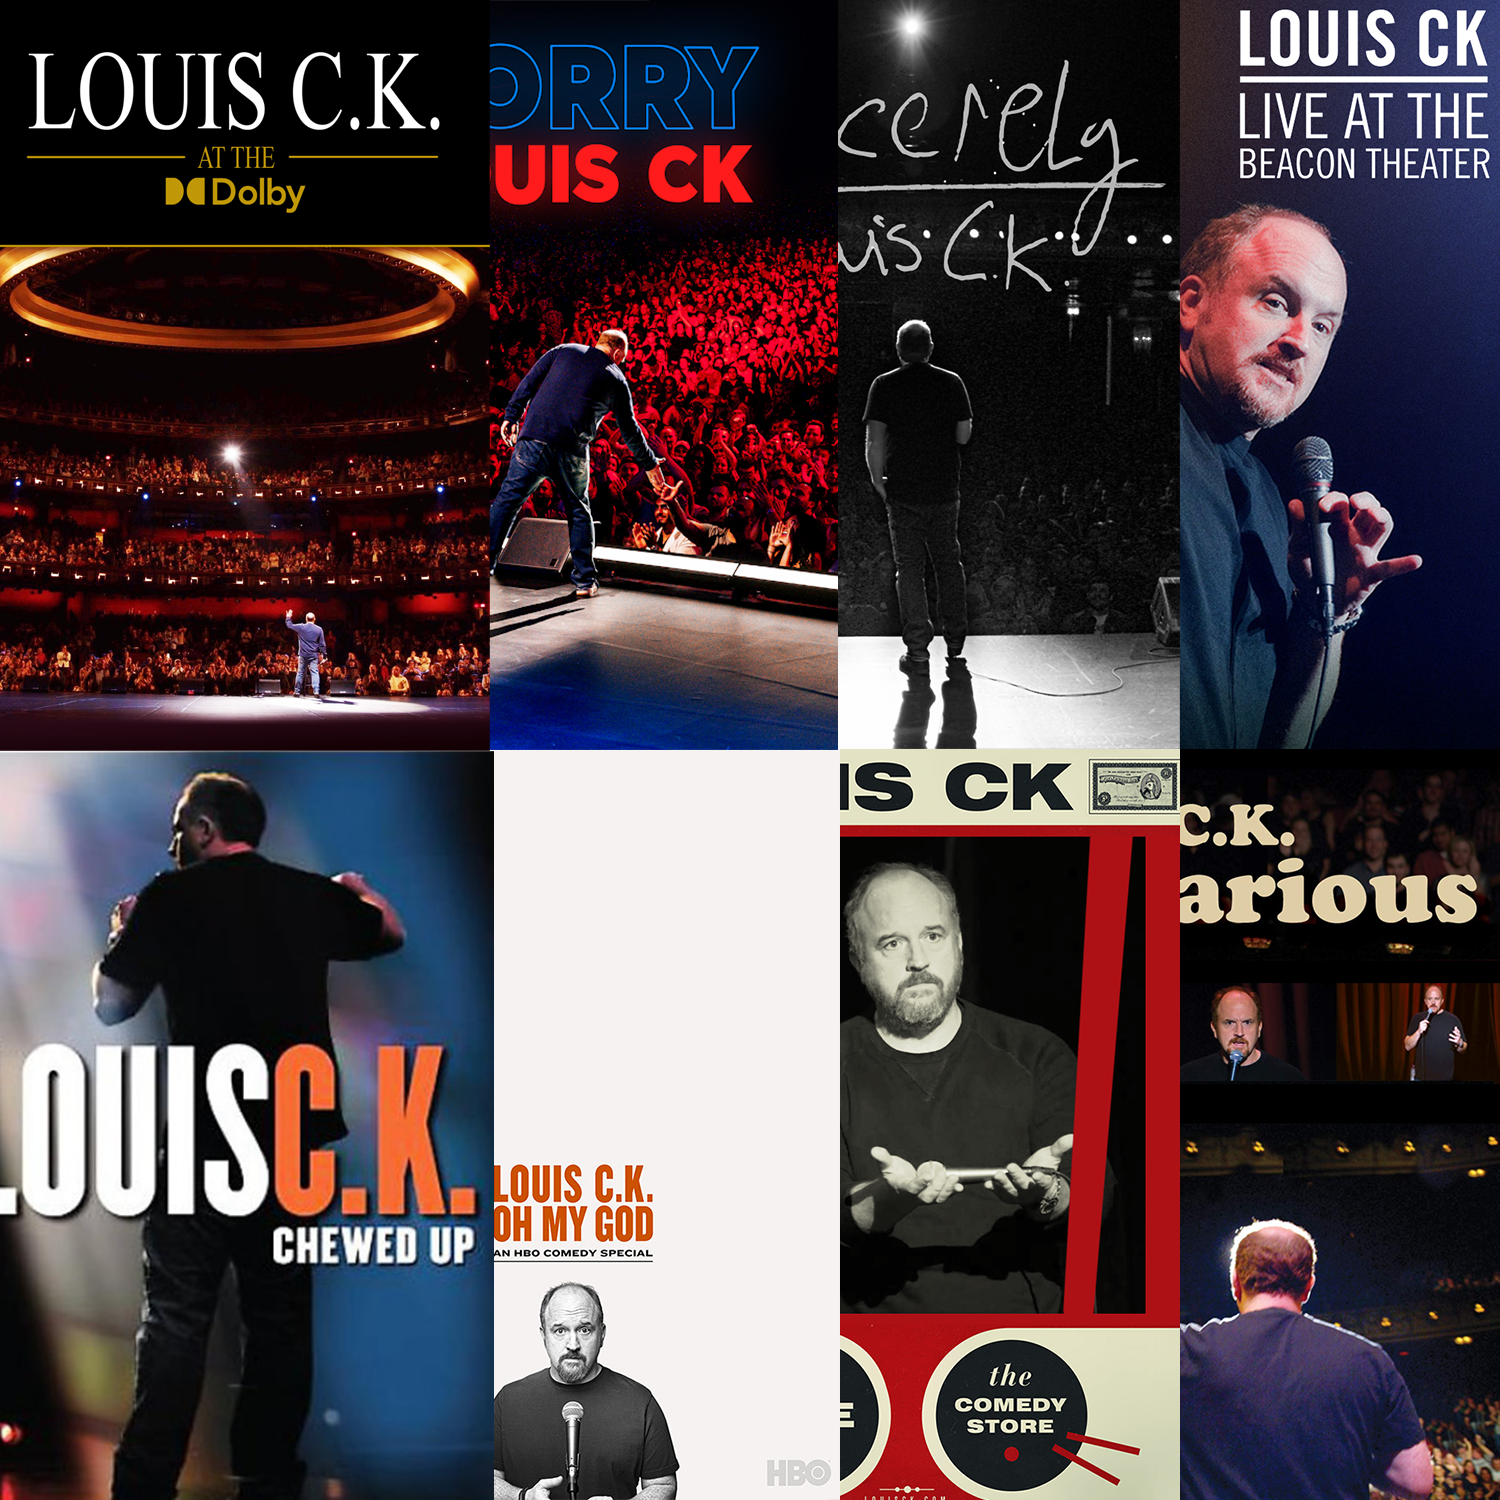 Louis CK: Chewed Up